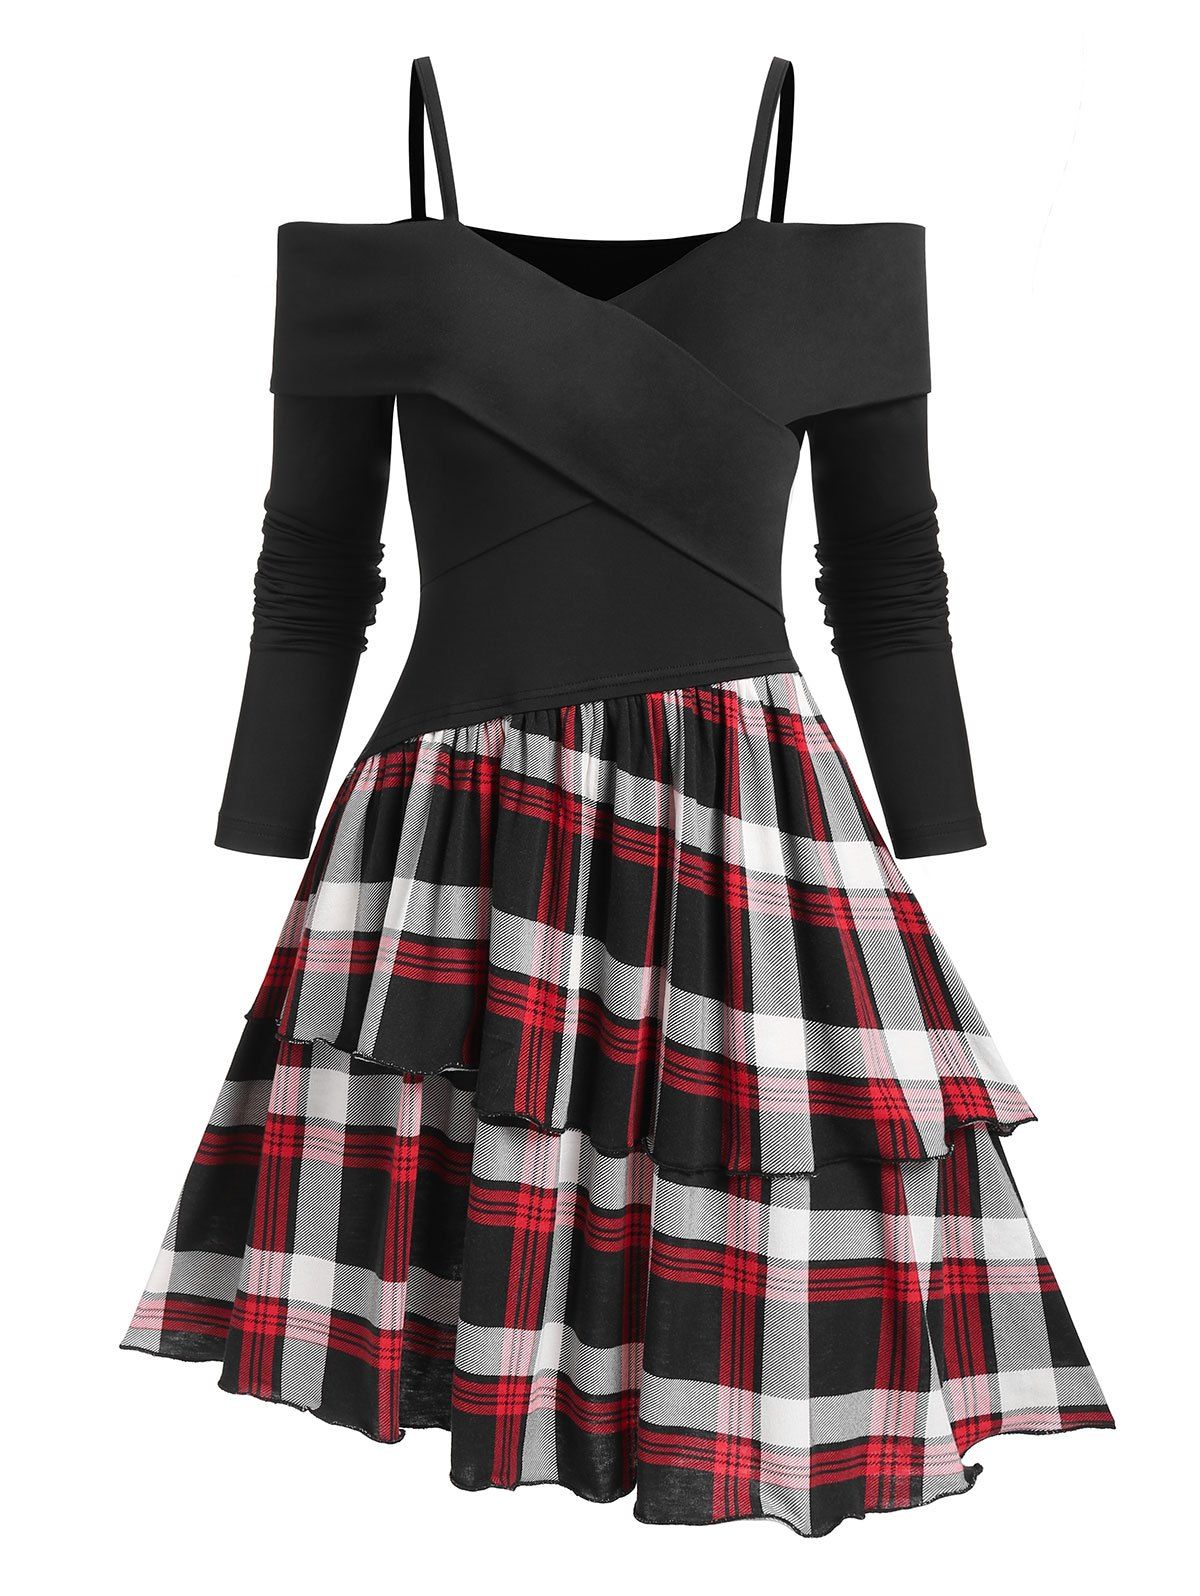 Crossover Plaid Layered Asymmetrical Flare Dress - BLACK XXXL